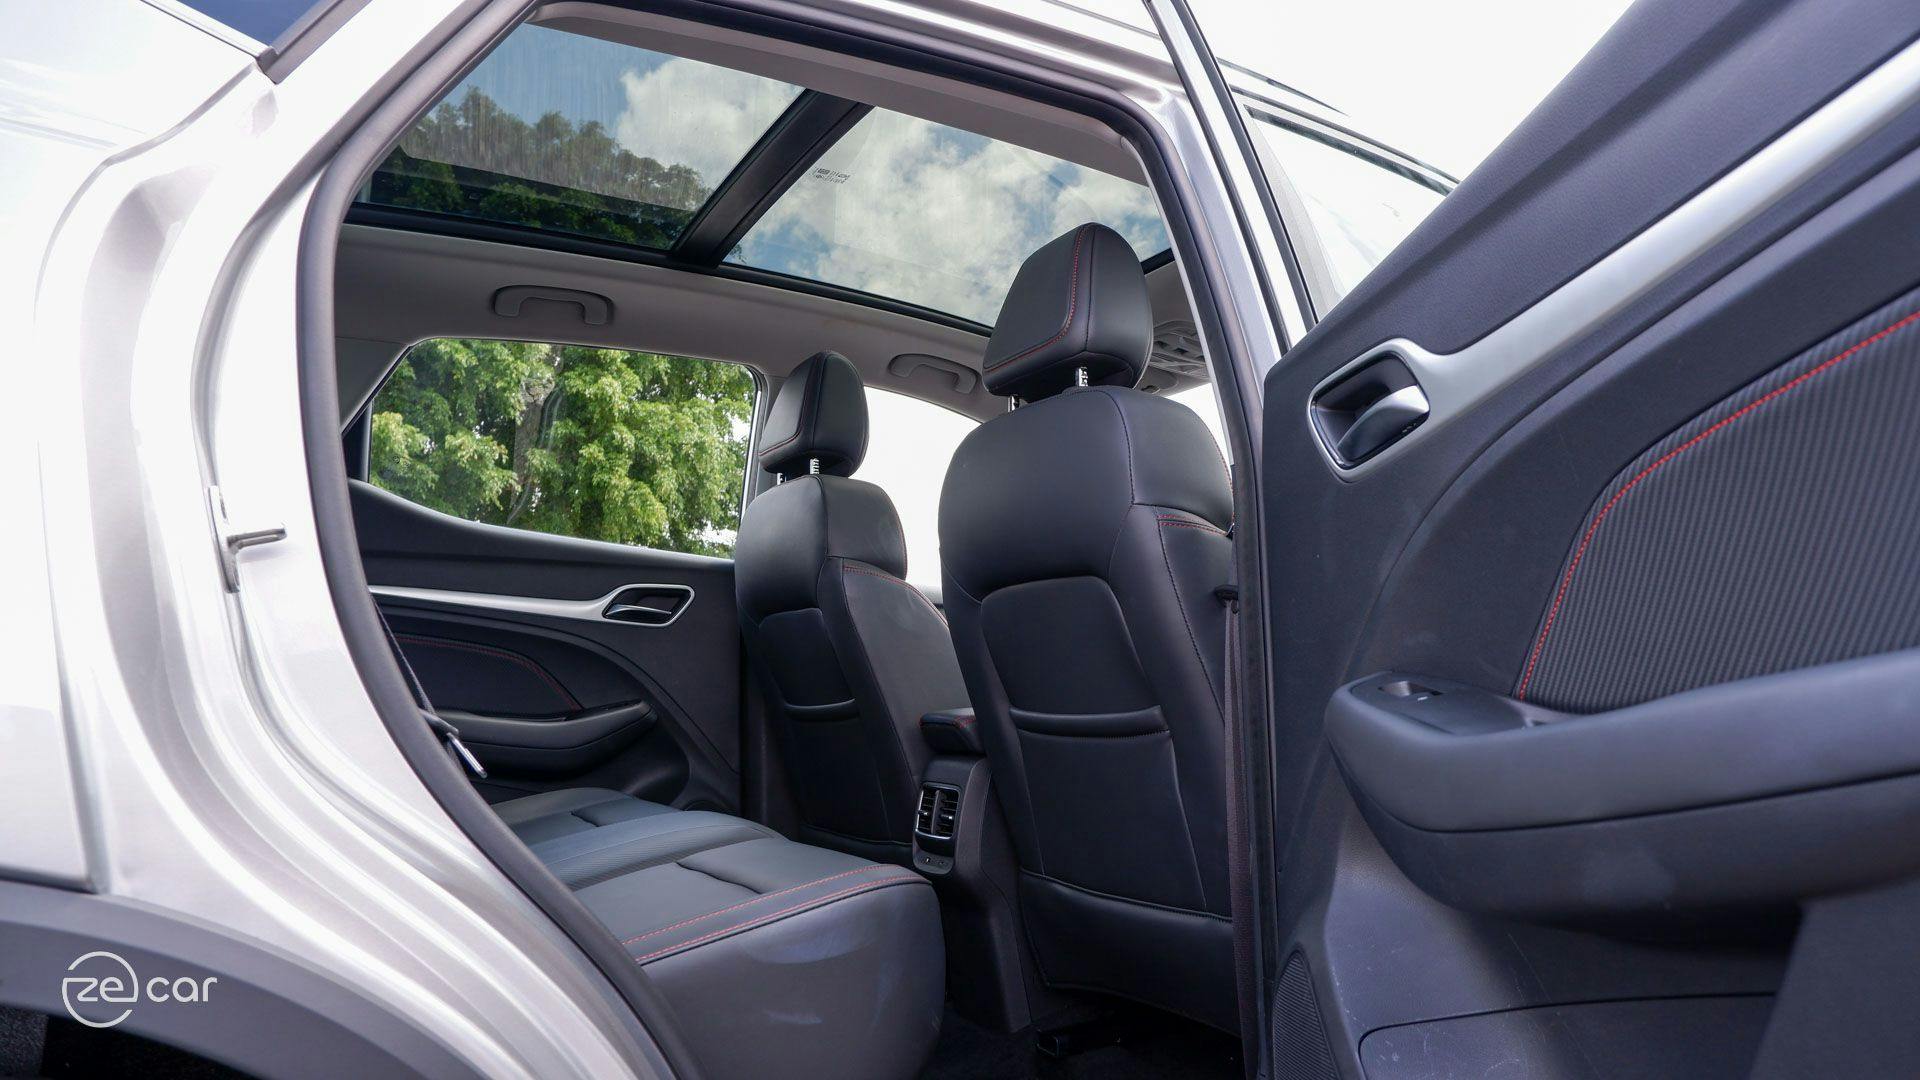 MG ZS EV rear row seats and panoramic sunroof